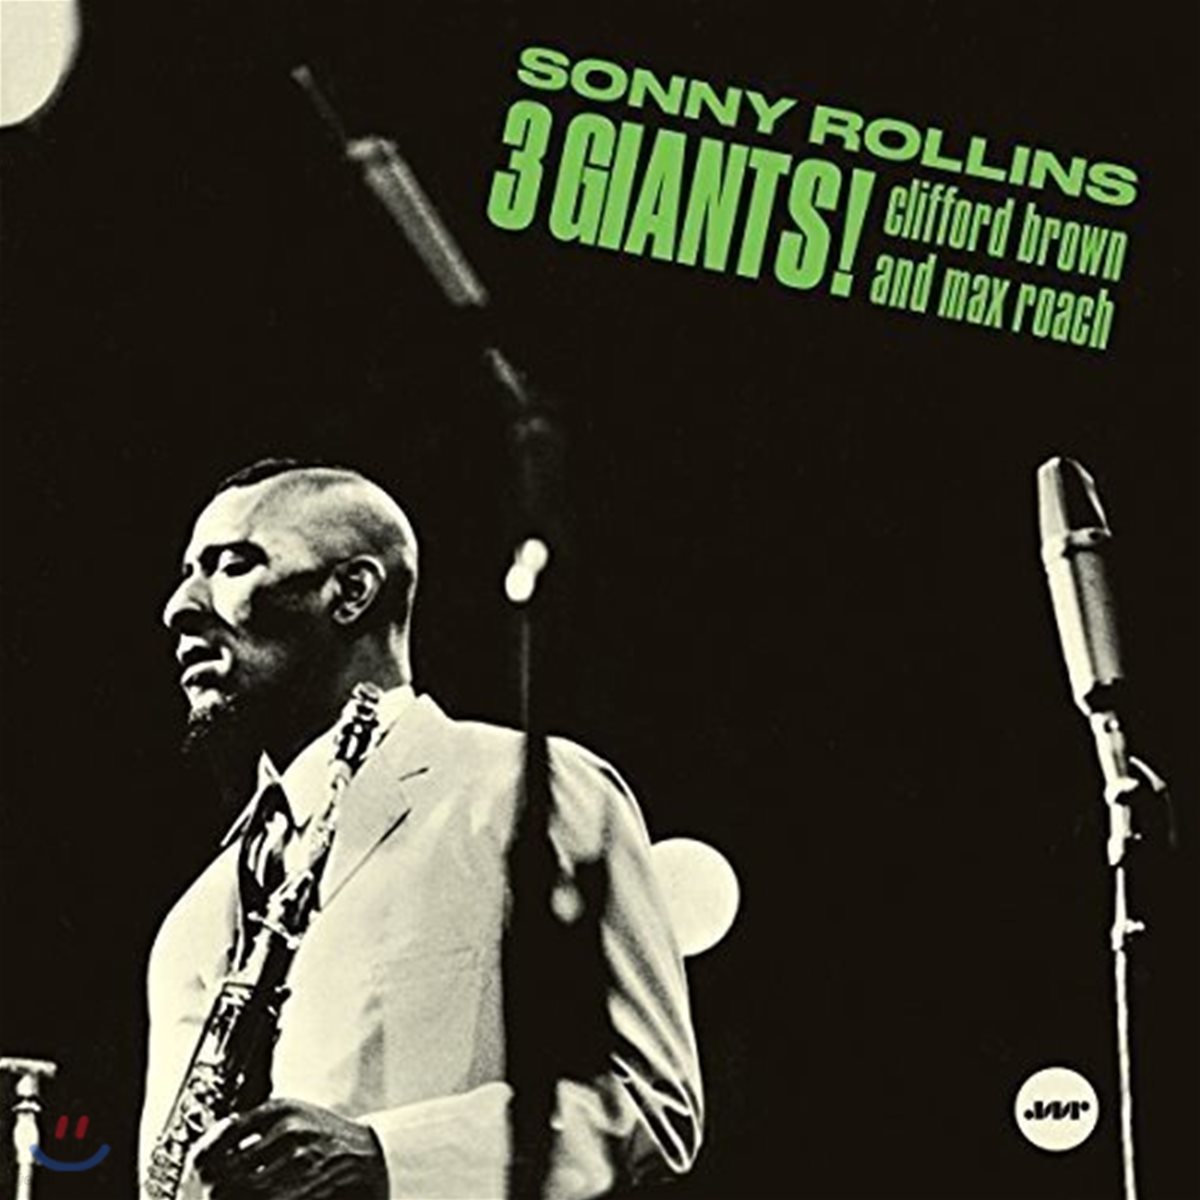 Sonny Rollins / Clifford Brown / Max Roach - 3 Giants 소니 롤린스, 클리포드 브라운 &amp; 맥스 로치 [LP]